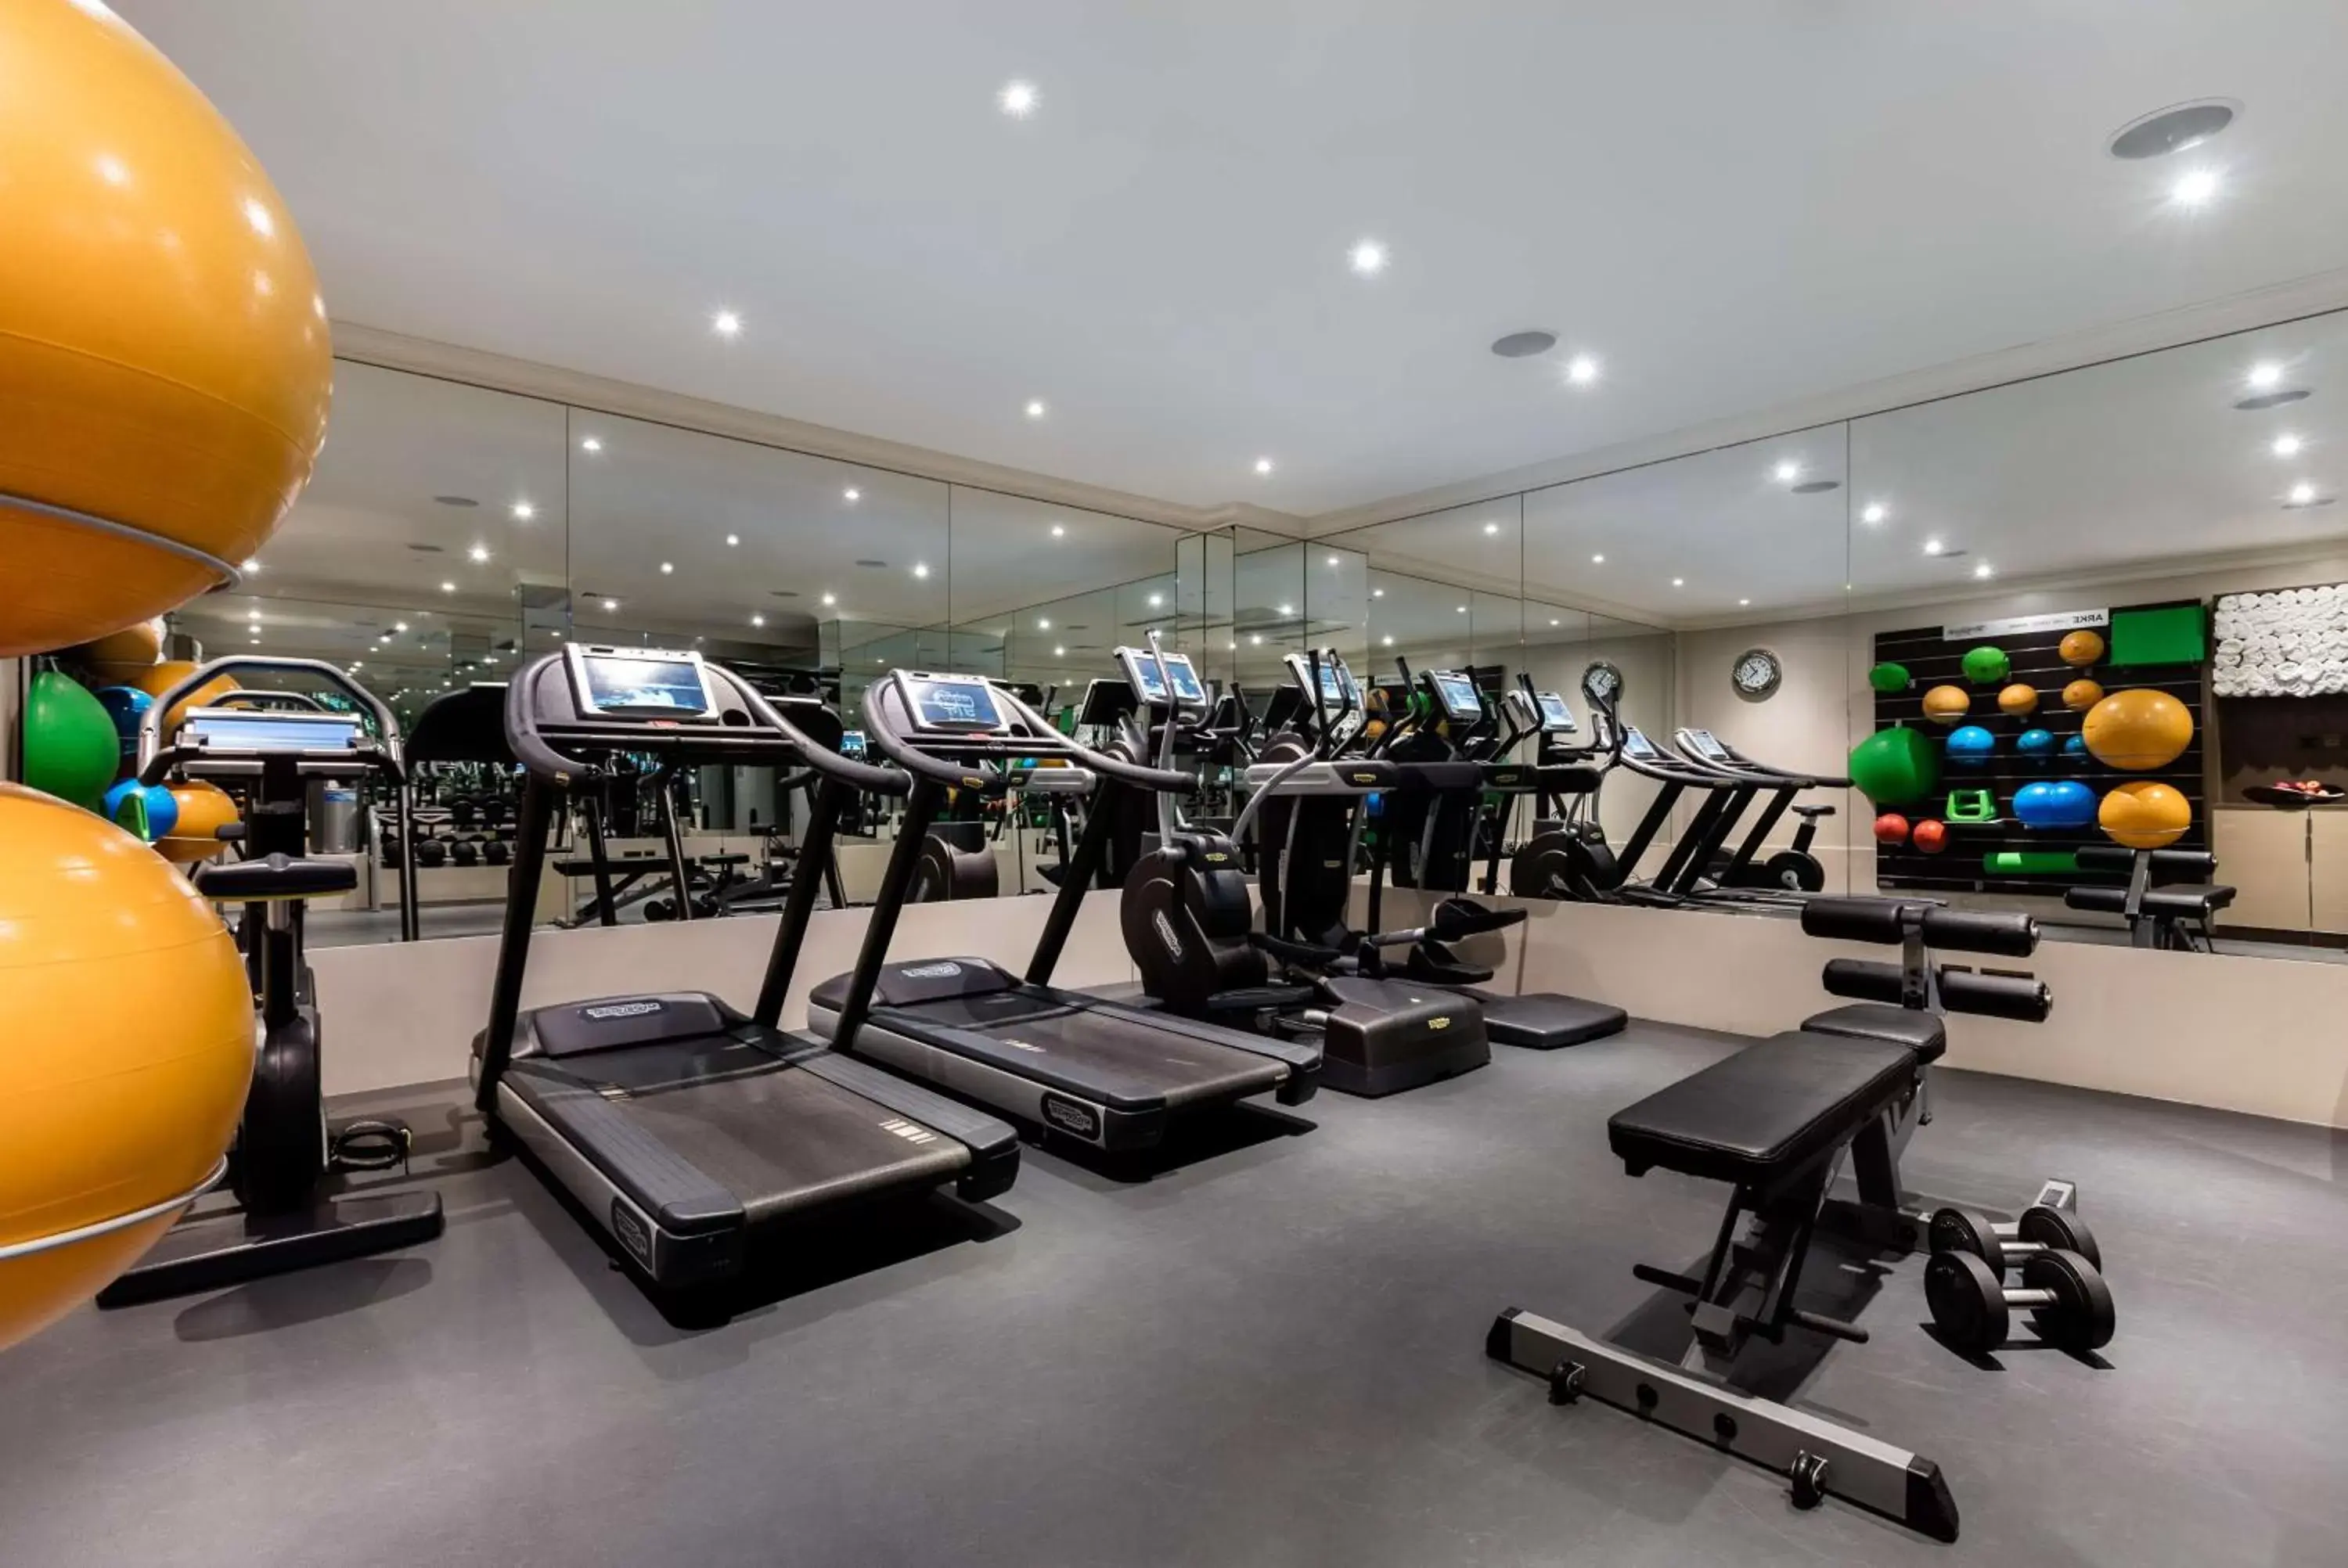 Fitness centre/facilities, Fitness Center/Facilities in Radisson Blu Edwardian Mercer Street Hotel, London